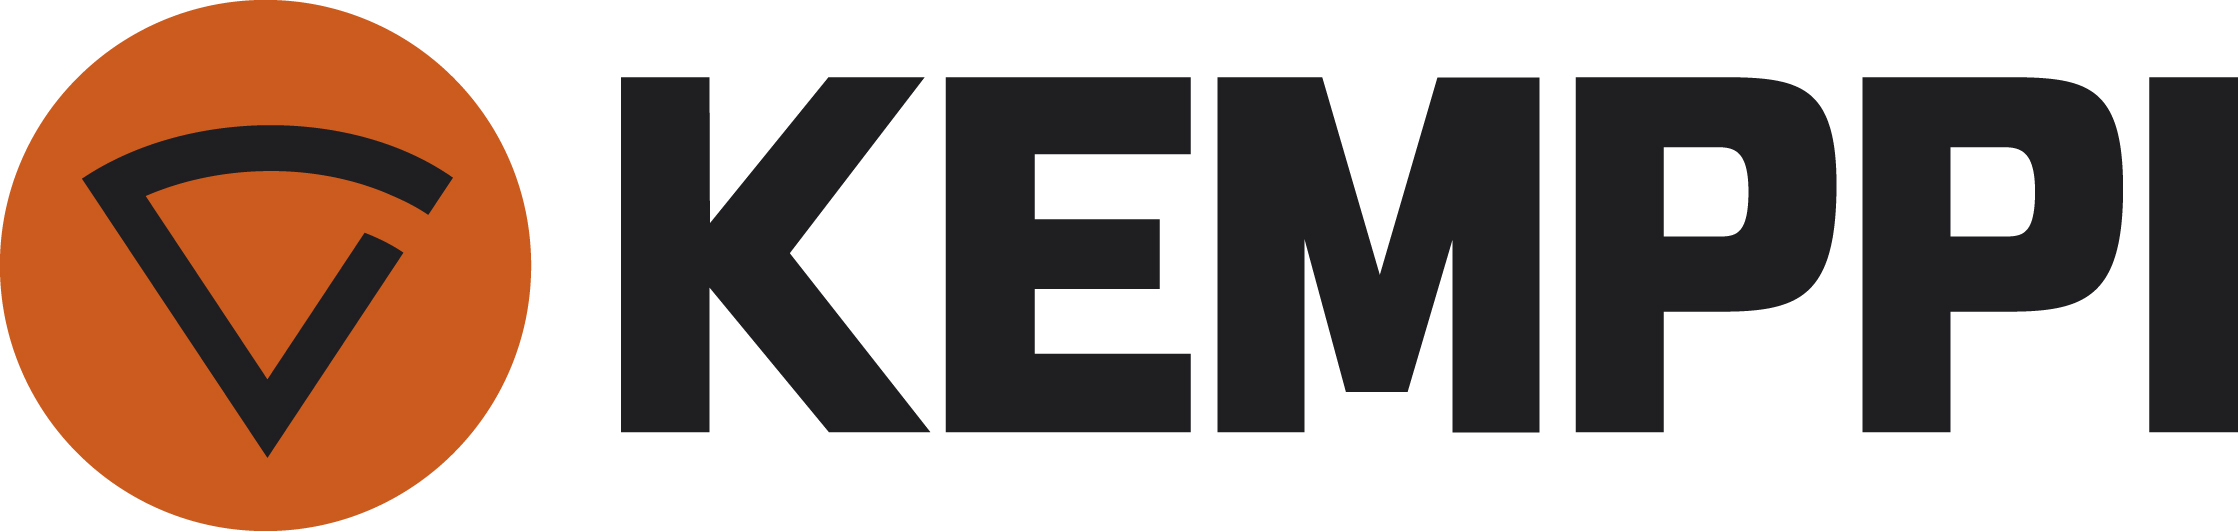 Kemppi-logo